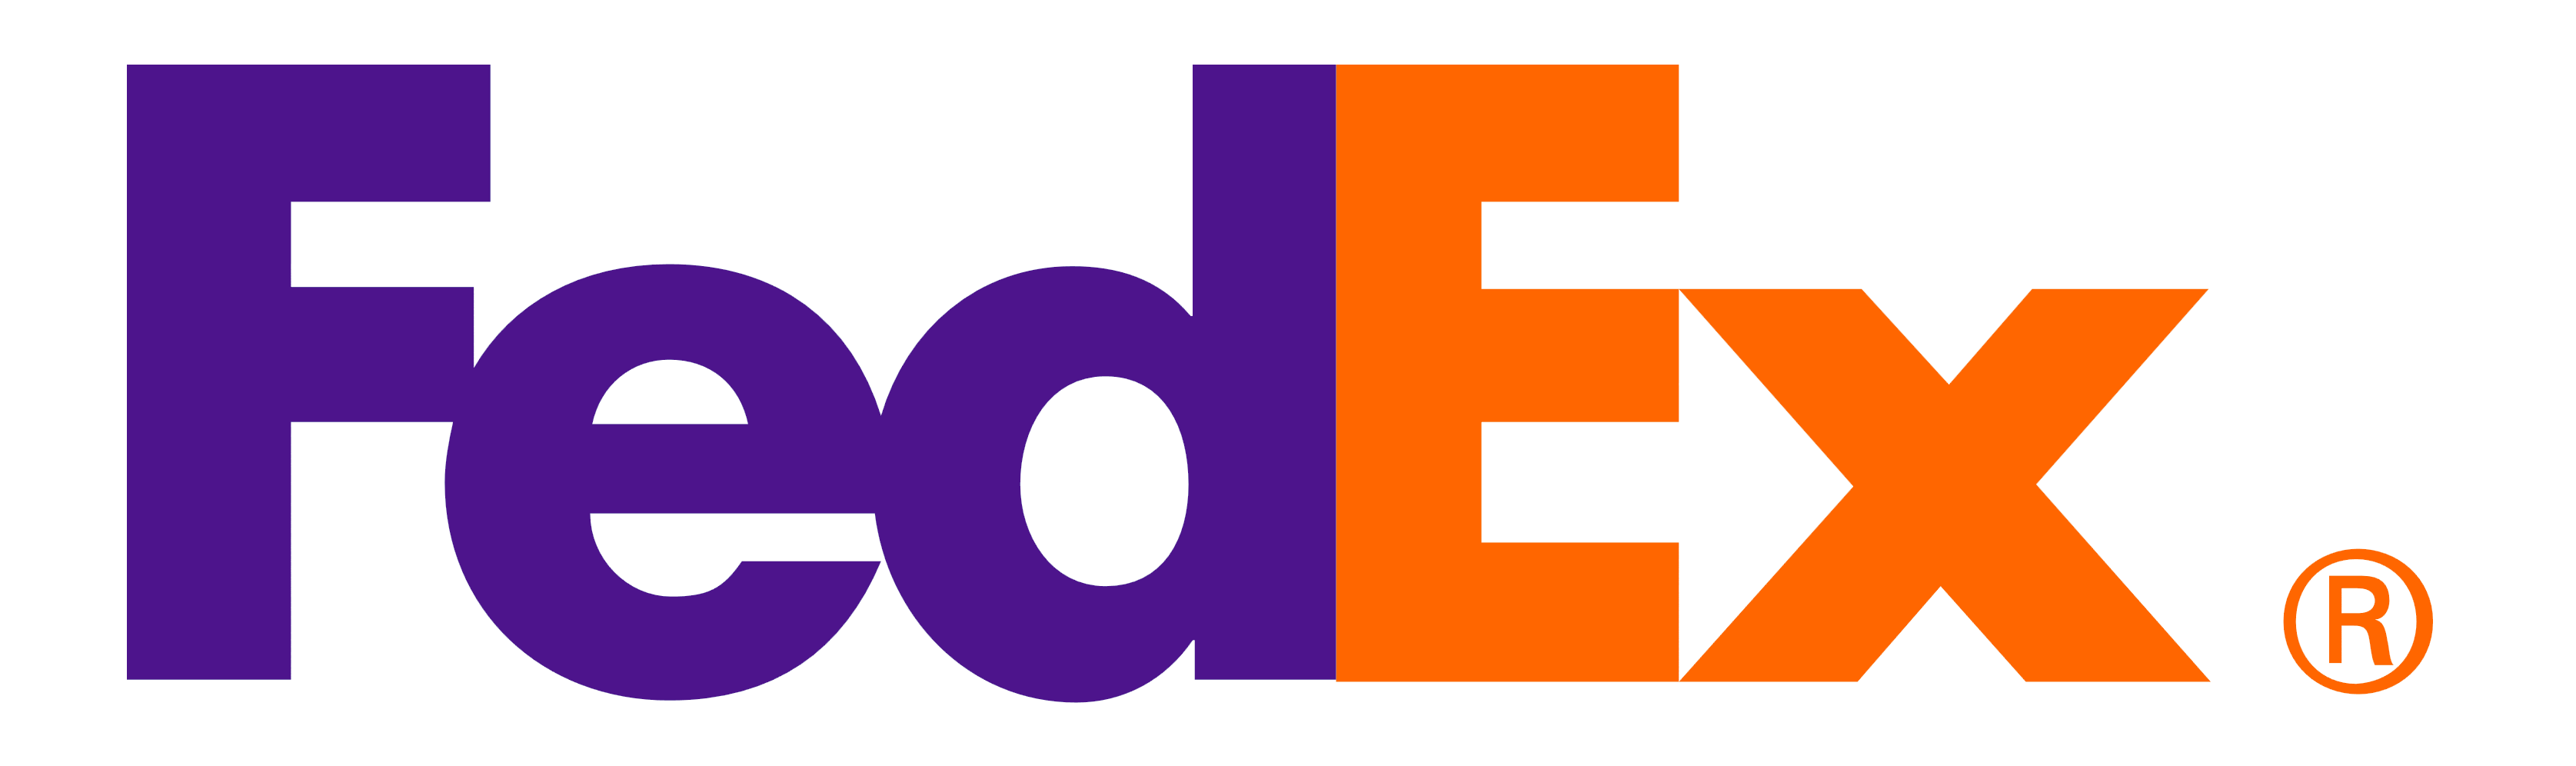 Fedex Express logo, logotype